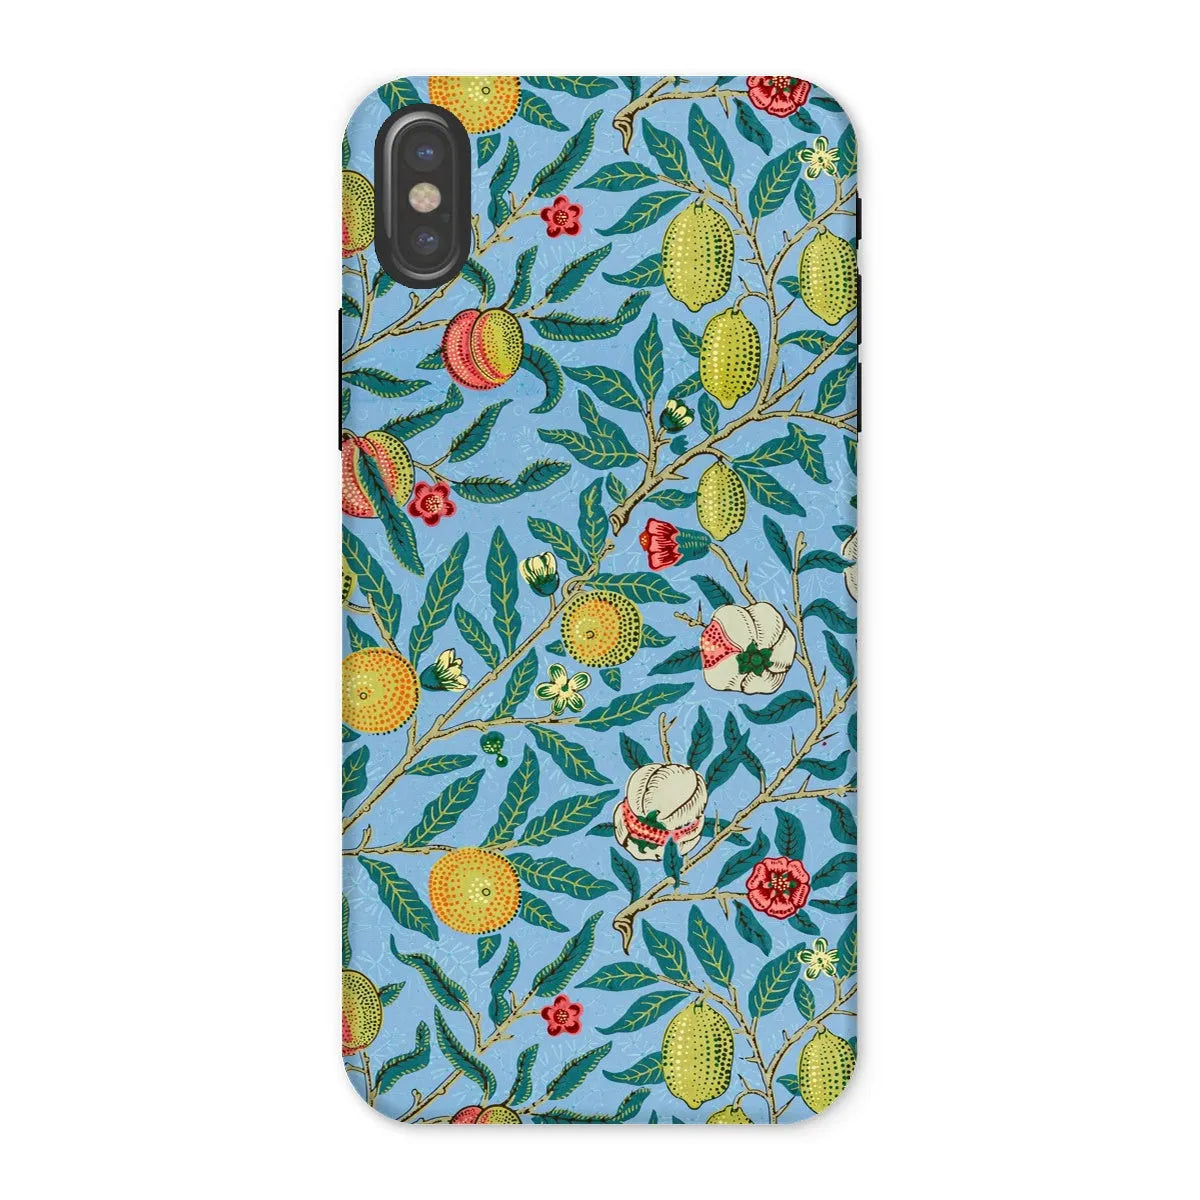 Four Fruits Aesthetic Art Phone Case - William Morris - Iphone x / Matte - Mobile Phone Cases - Aesthetic Art